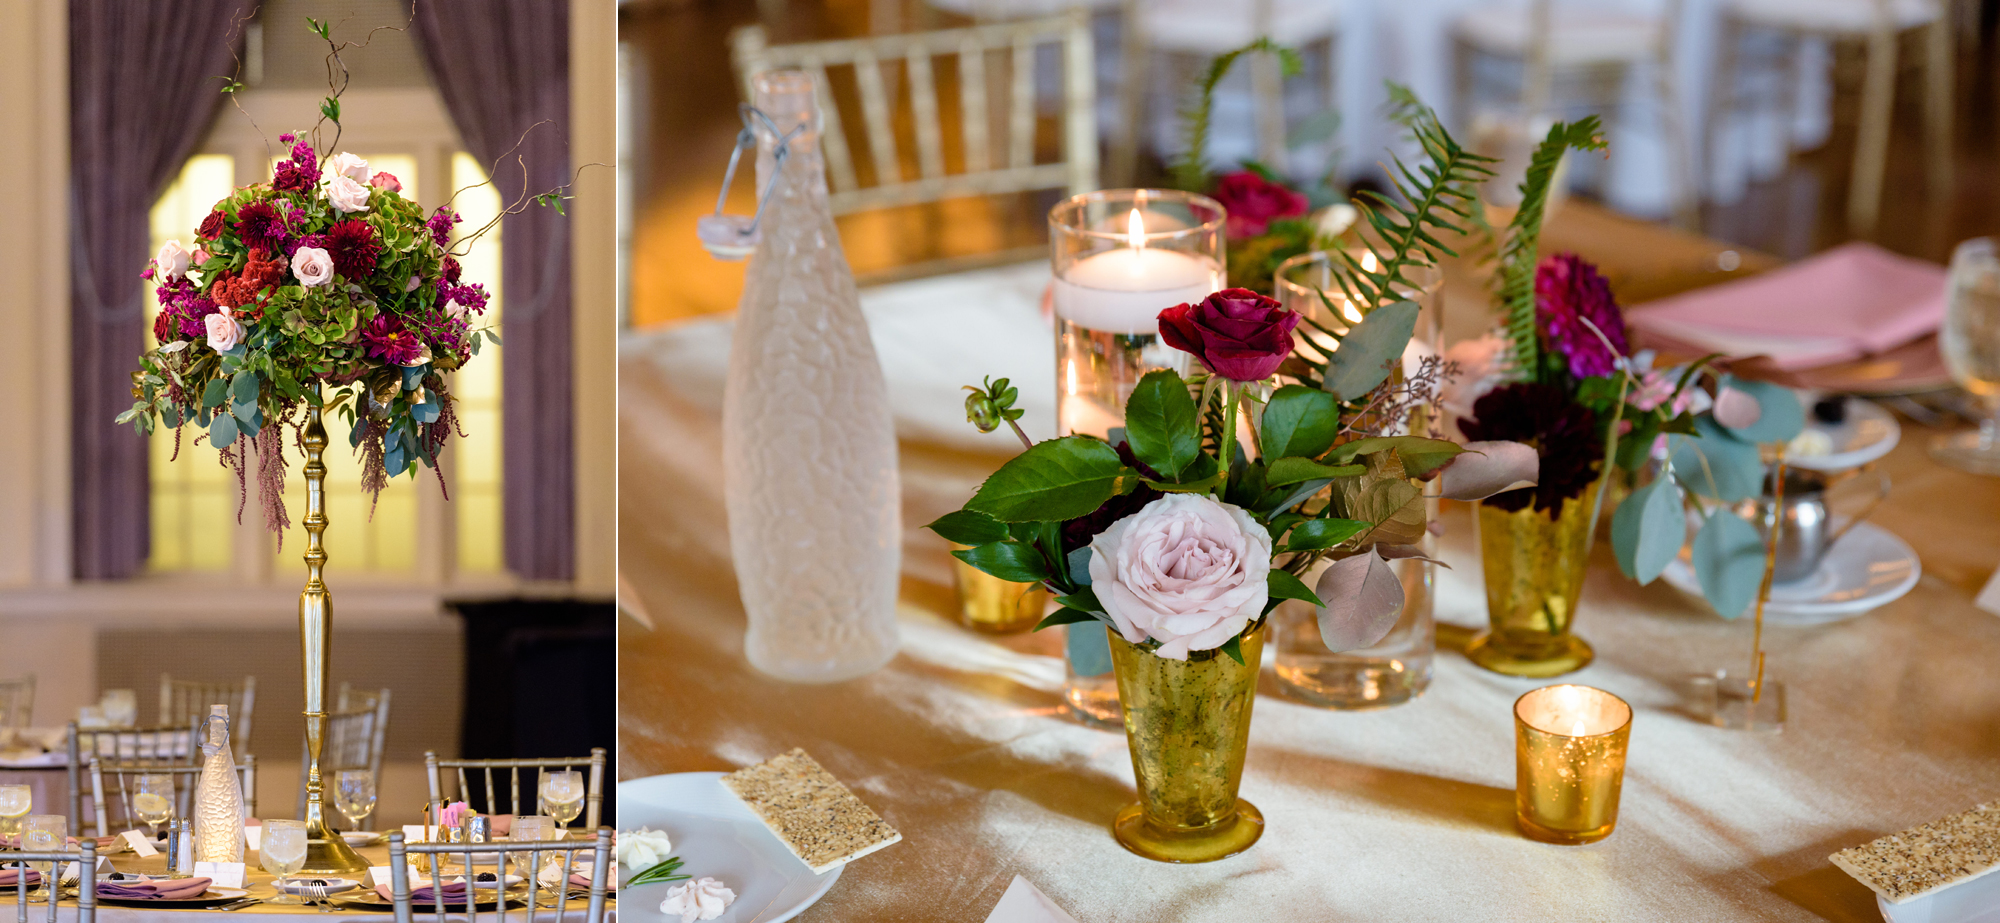 Wedding Reception details at the Palais Royale